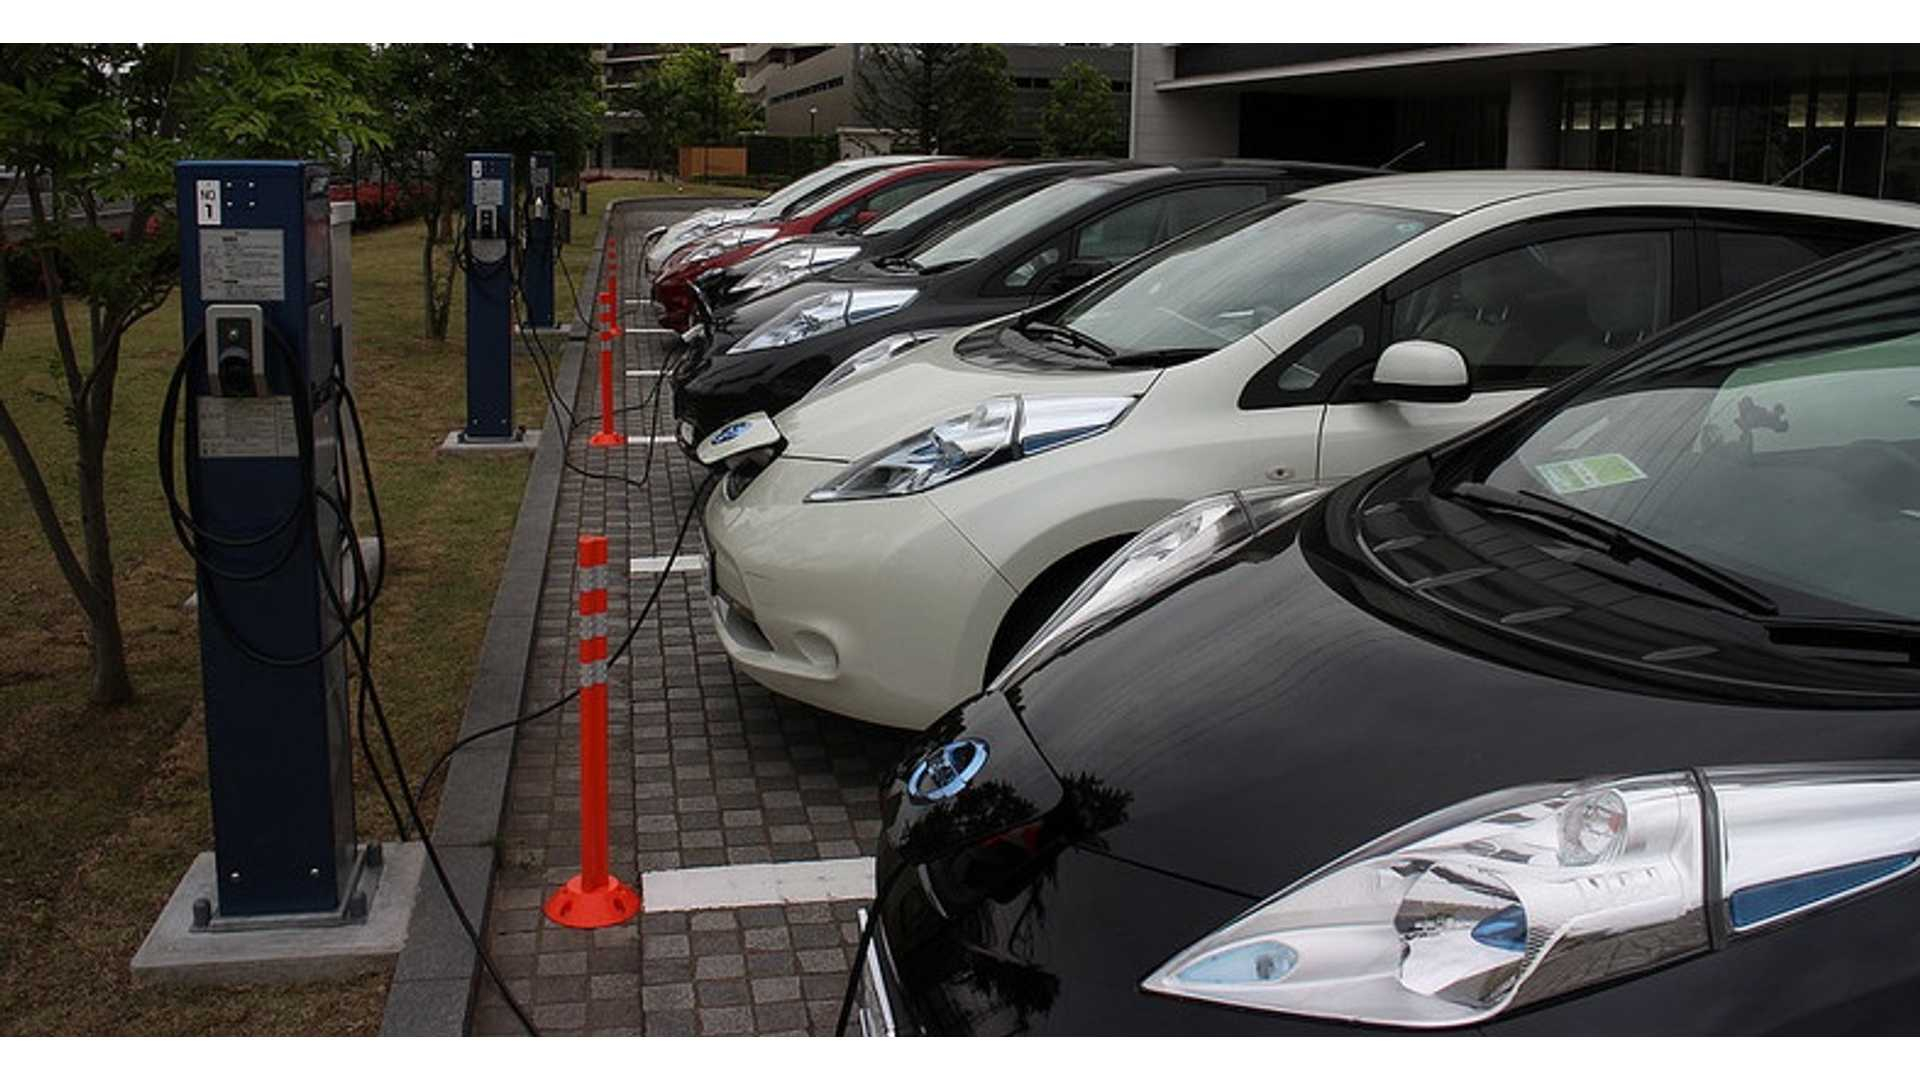 illinois-epa-opens-second-round-of-electric-vehicle-rebates-chronicle